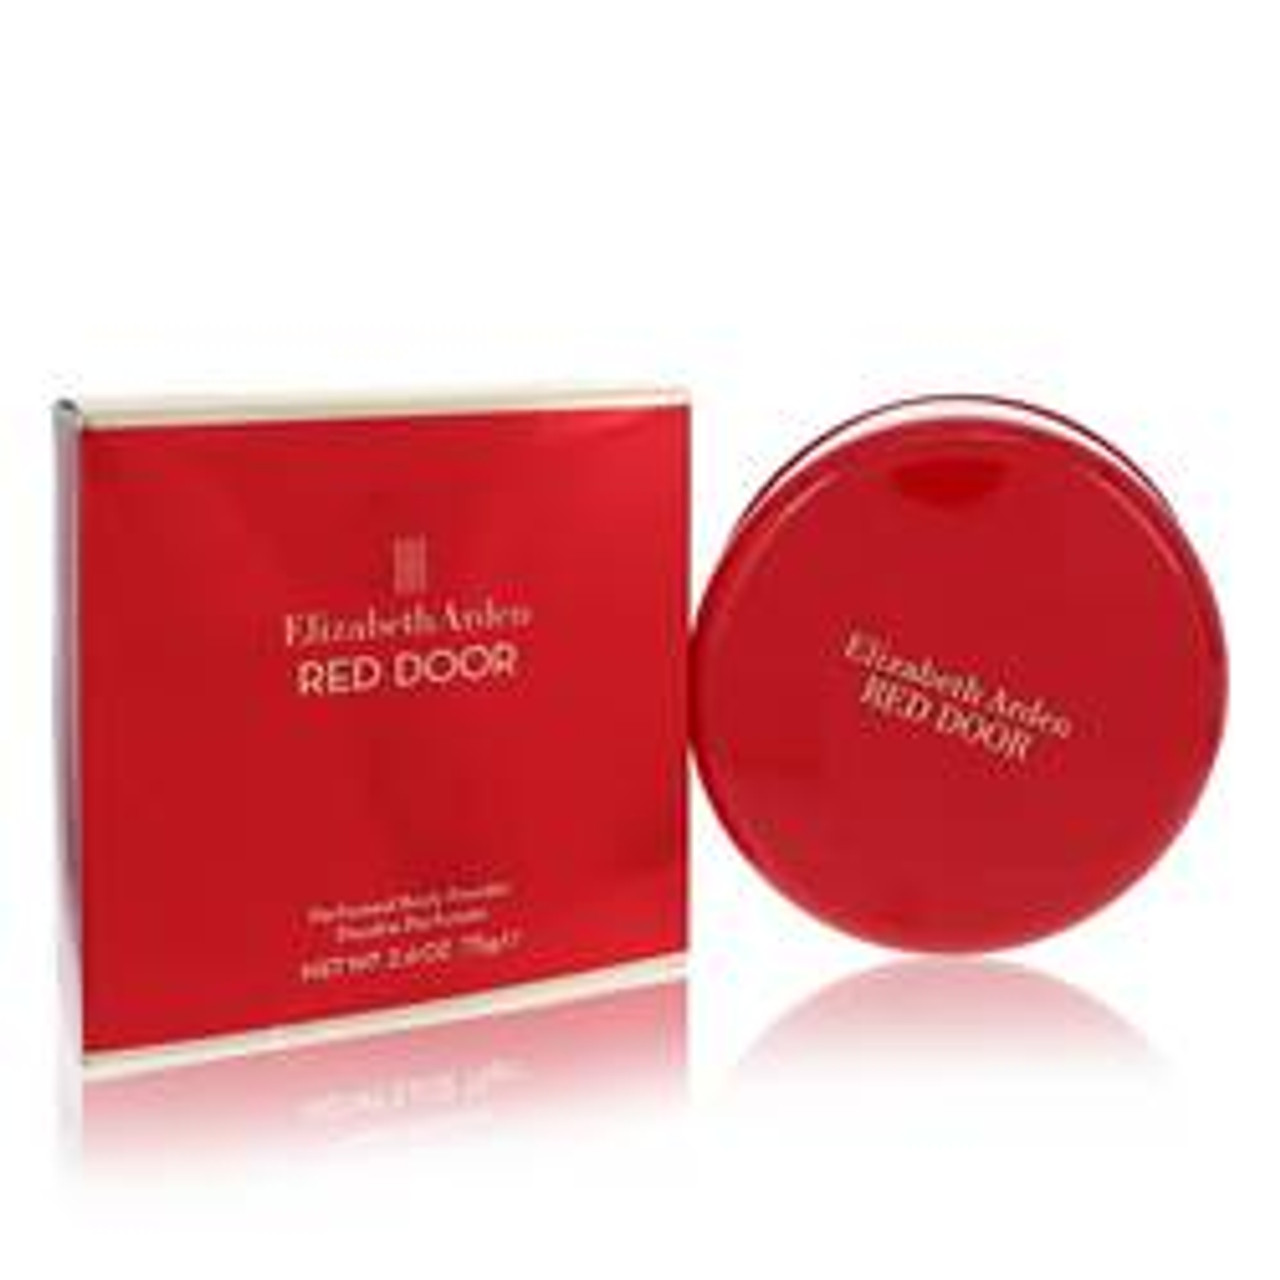 Red Door Perfume By Elizabeth Arden Body Powder 2.6 oz for Women - *Pre-Order